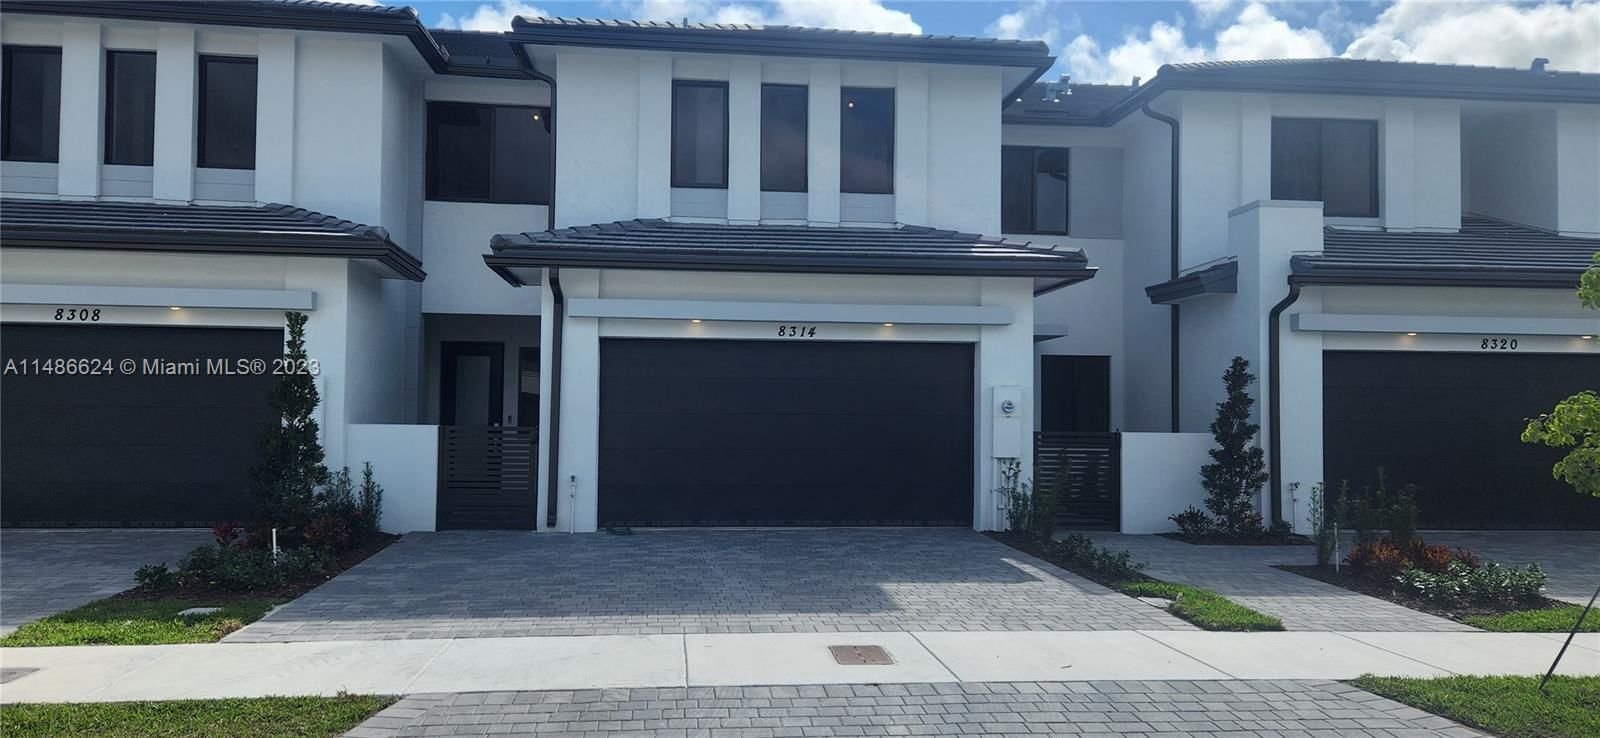 Real estate property located at 8314 120th Terrace, Miami-Dade County, CENTRIS, Miami, FL